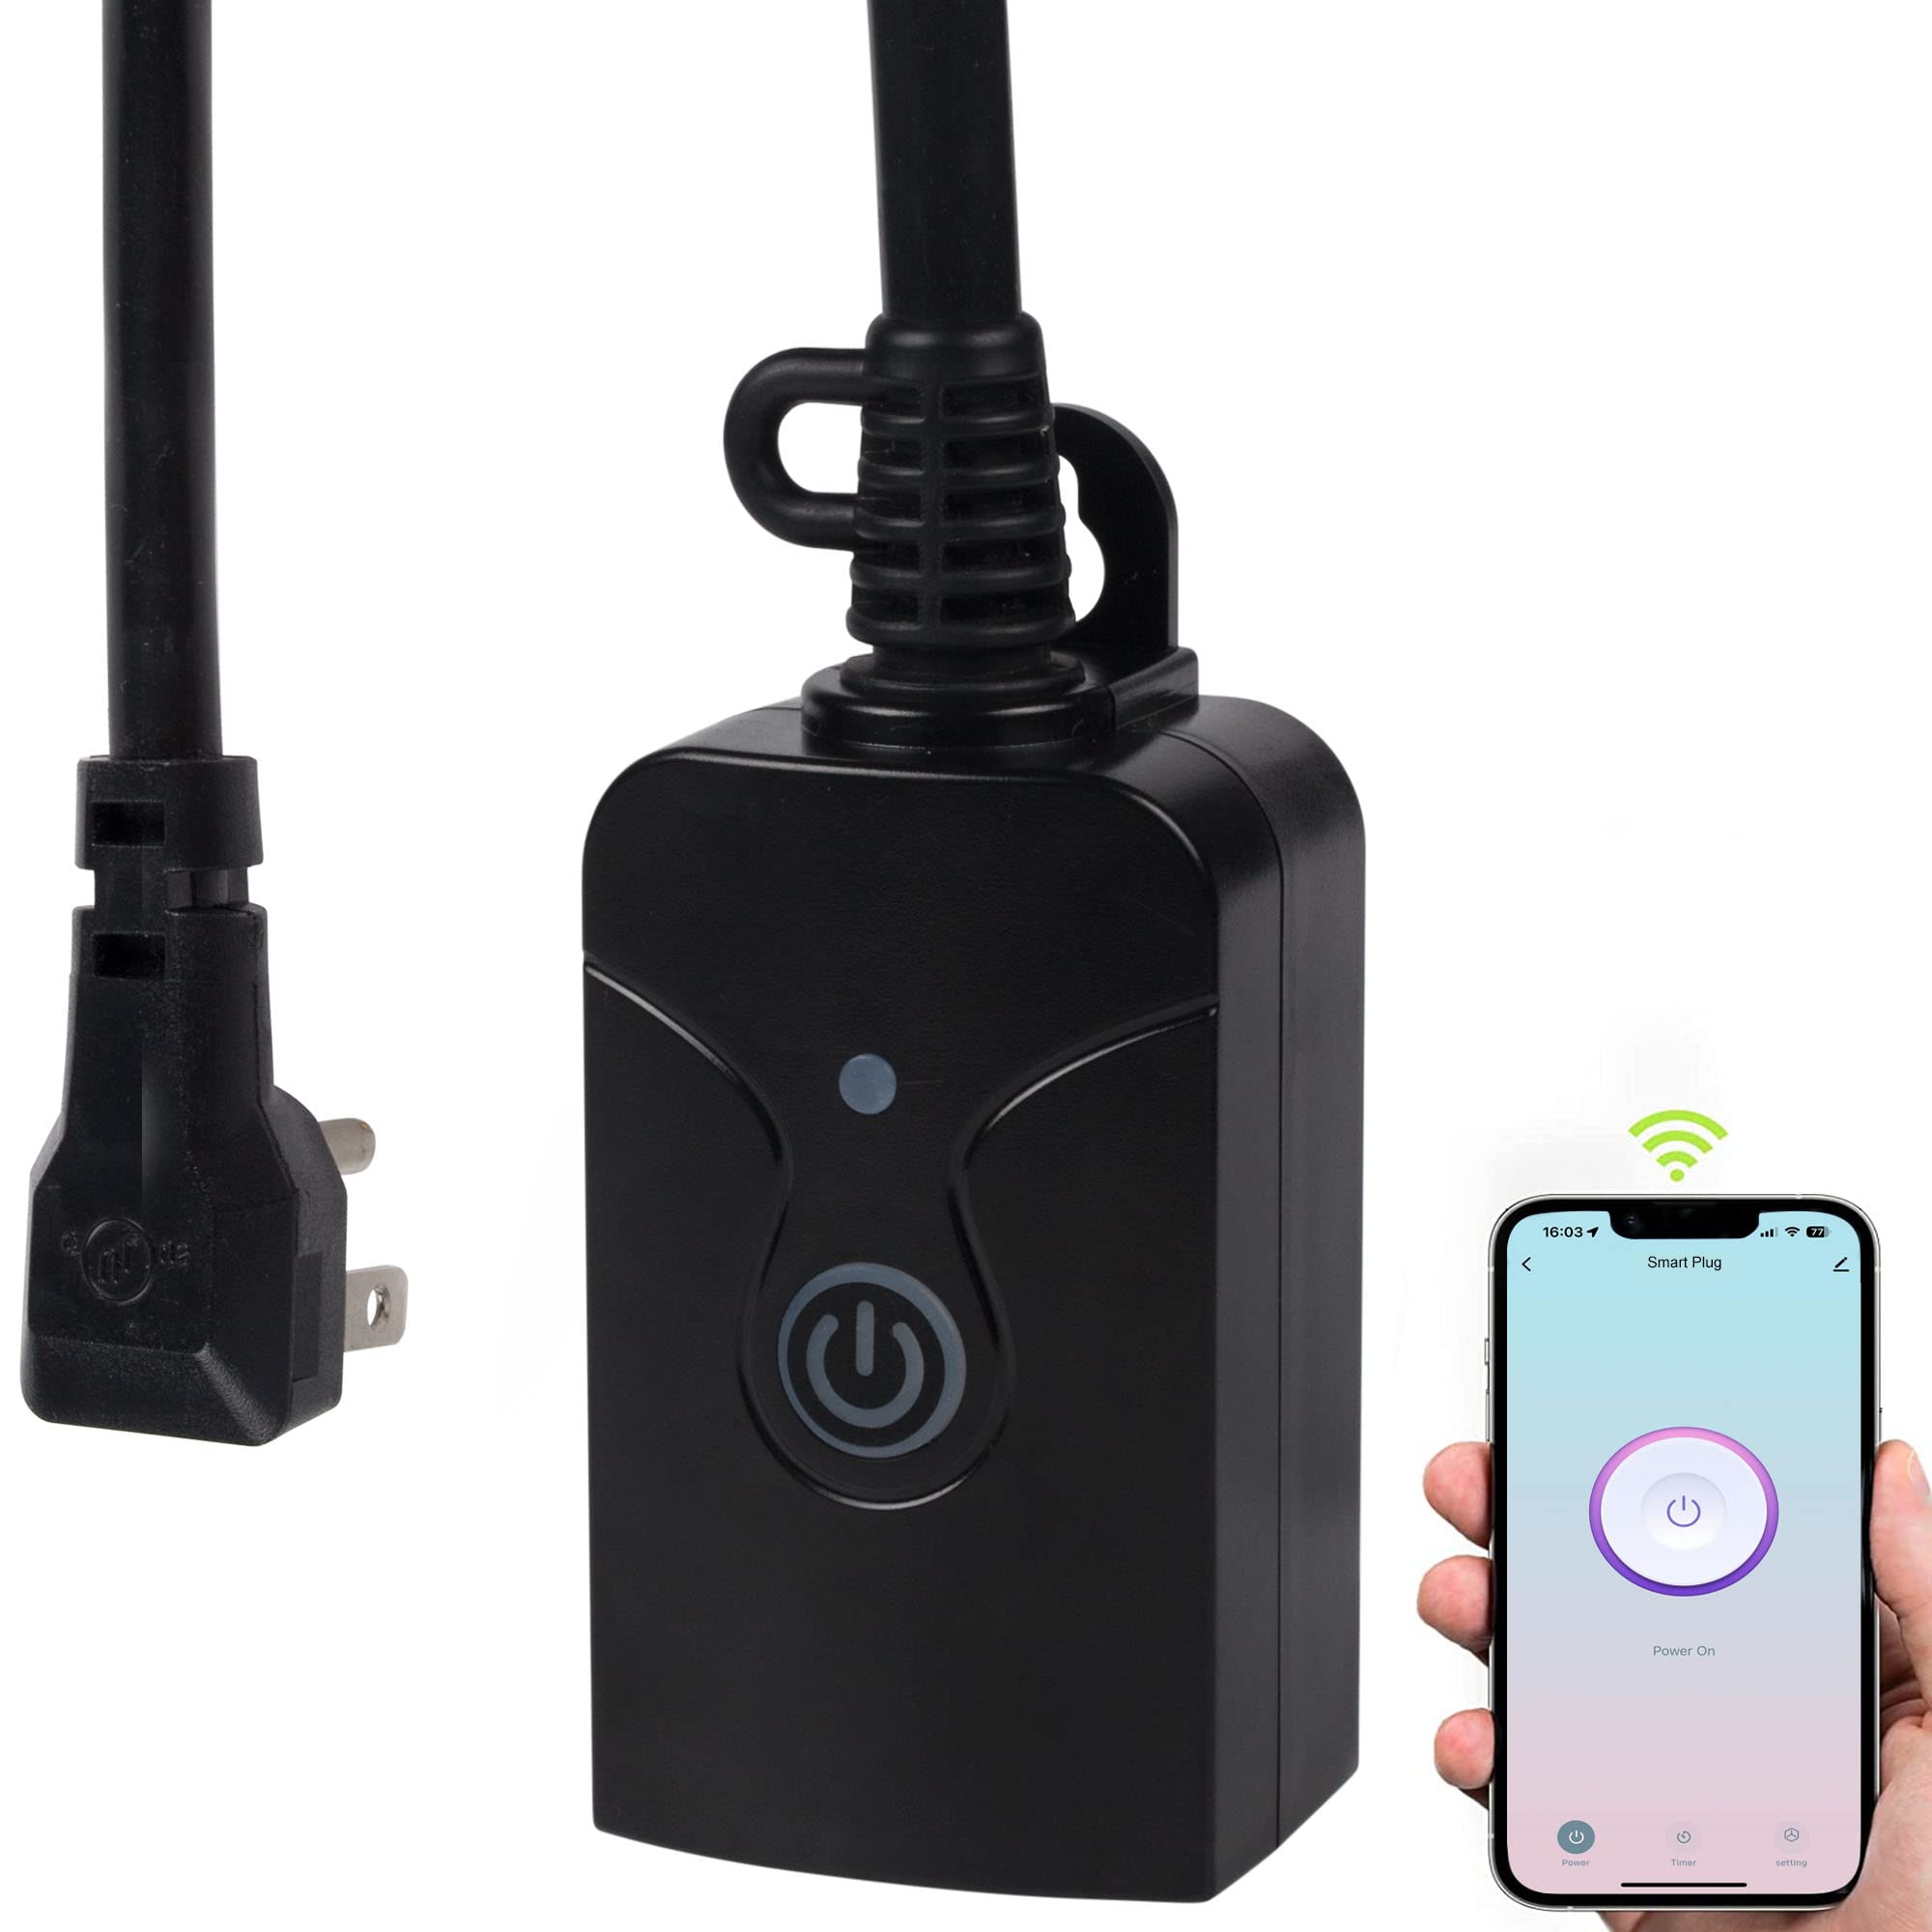 Avoir Zigbee Tuya IP66 Wall Outdoor Waterproof Socket Smart Wifi Connected  UK Plug With Timer Switch Work With Alexa Google Home